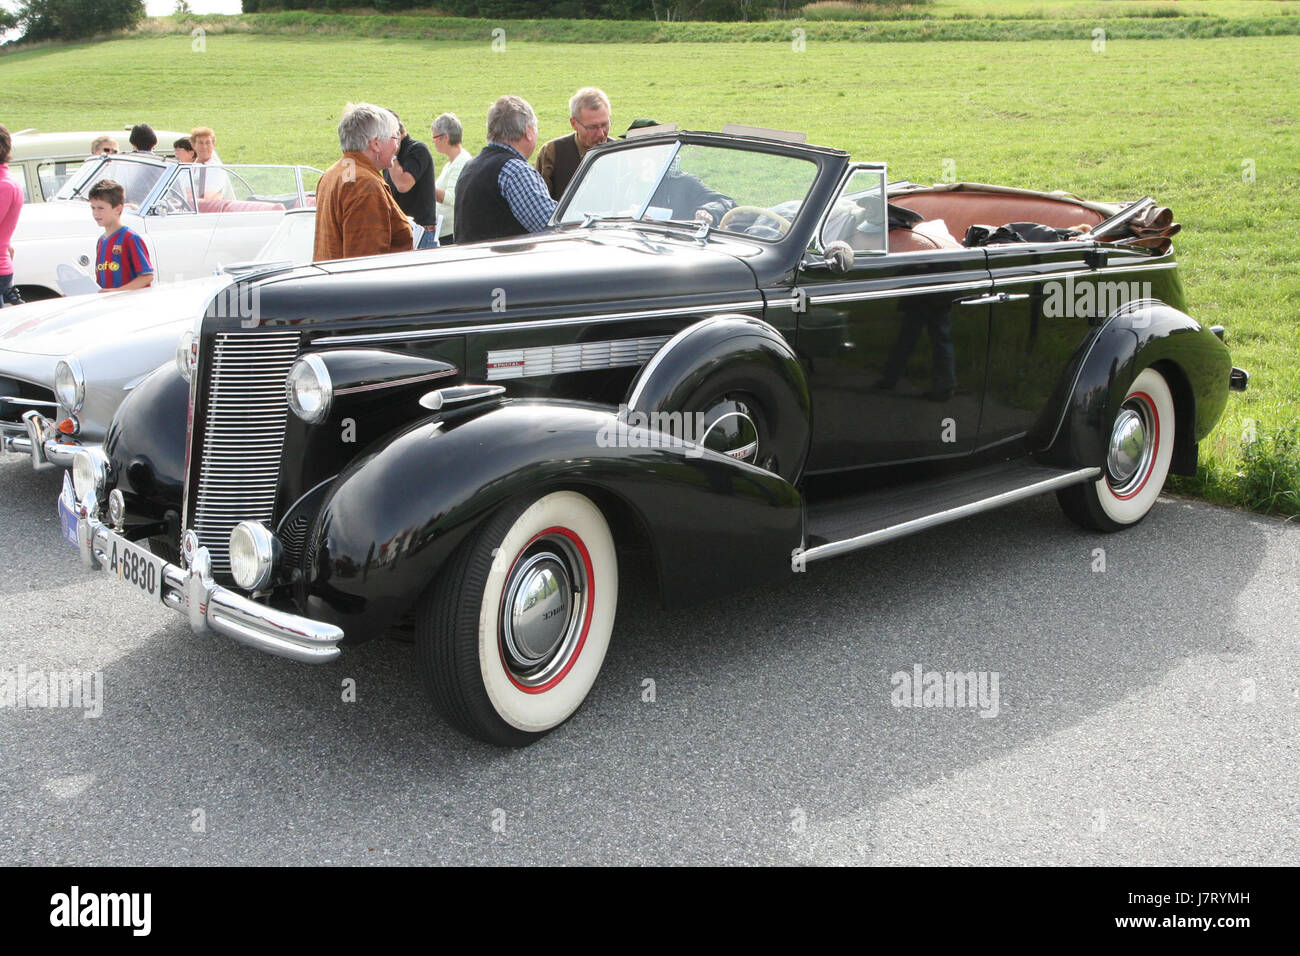 1937 Buick 4 Door Convertible, Owner Richard Riim IMG 9234 Stock Photo